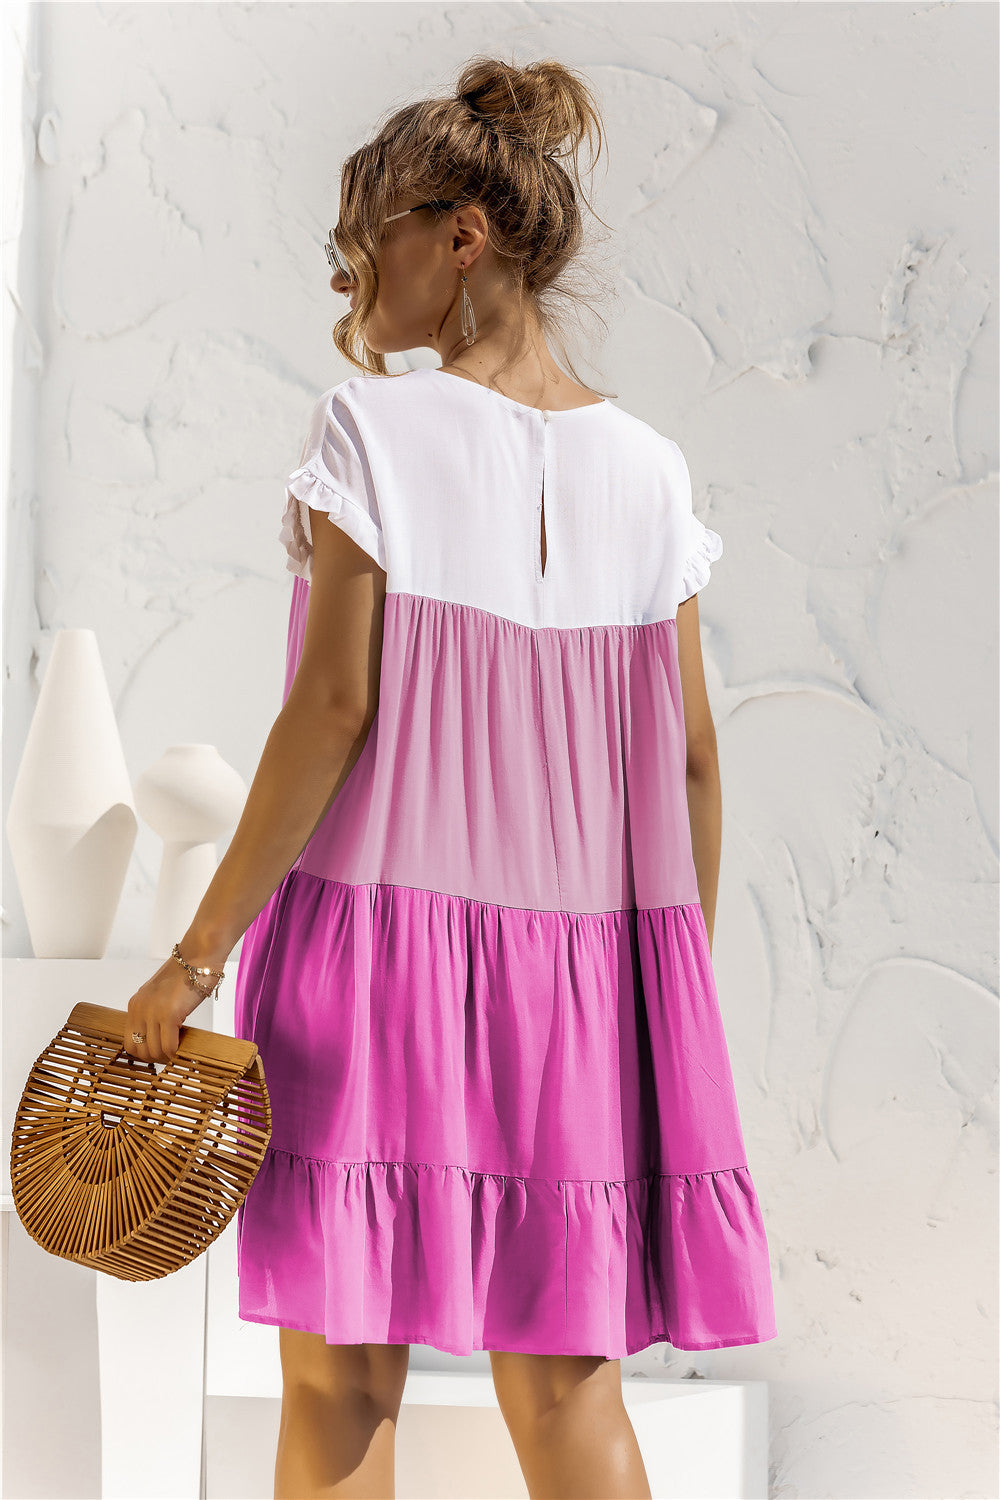 Summer Leisure Ruffled Daily Short Dresses-Mini Dresses-Free Shipping at meselling99